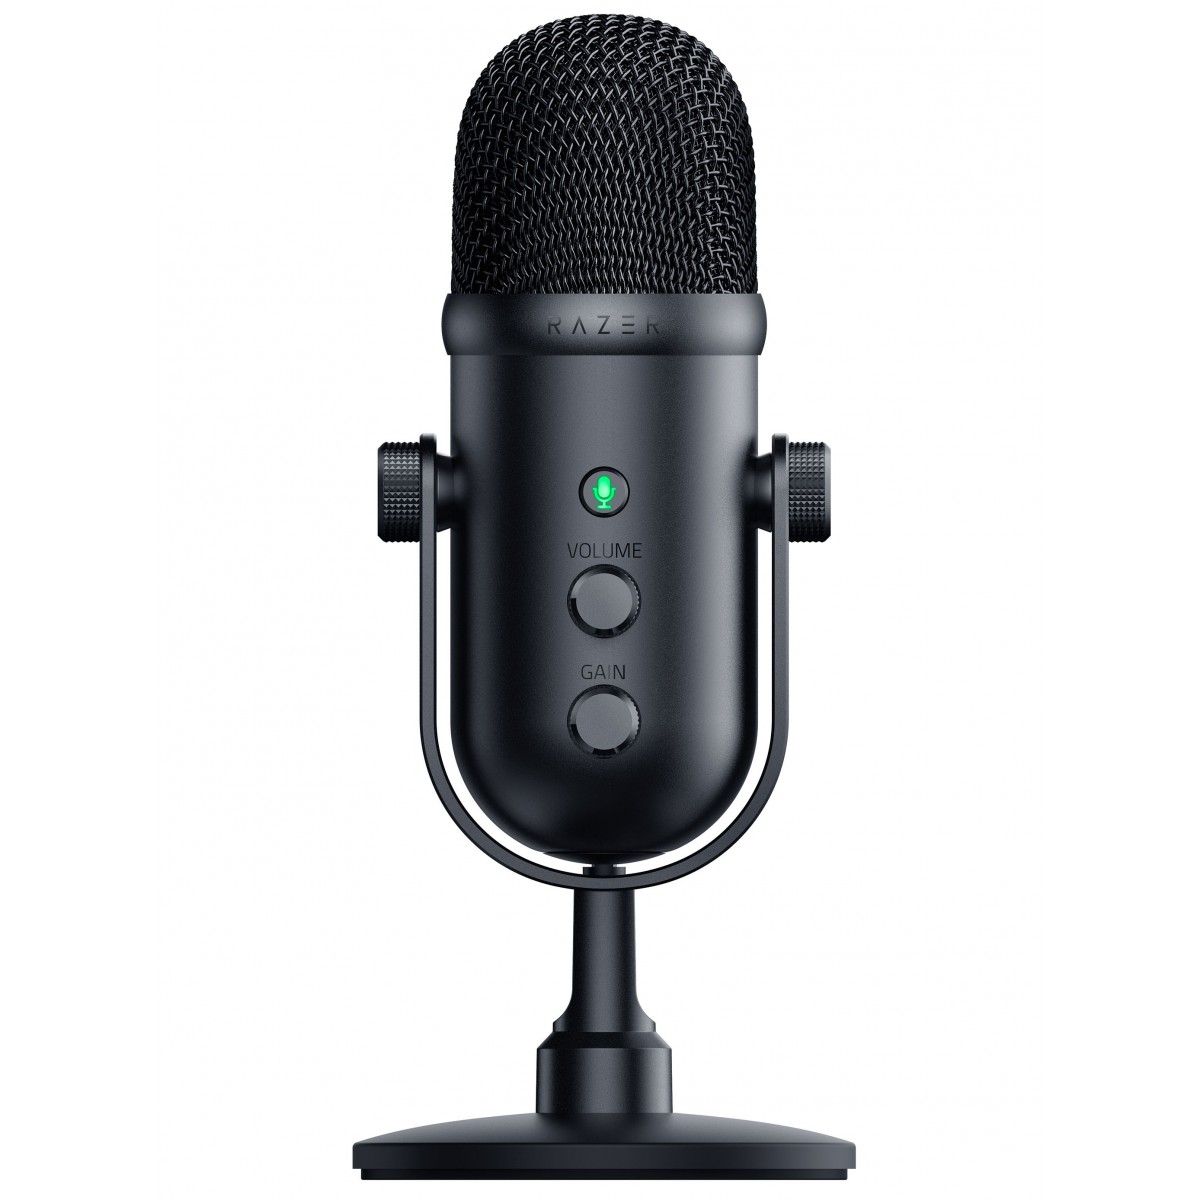 Razer Streaming Seiren V2 Pro Microphone black